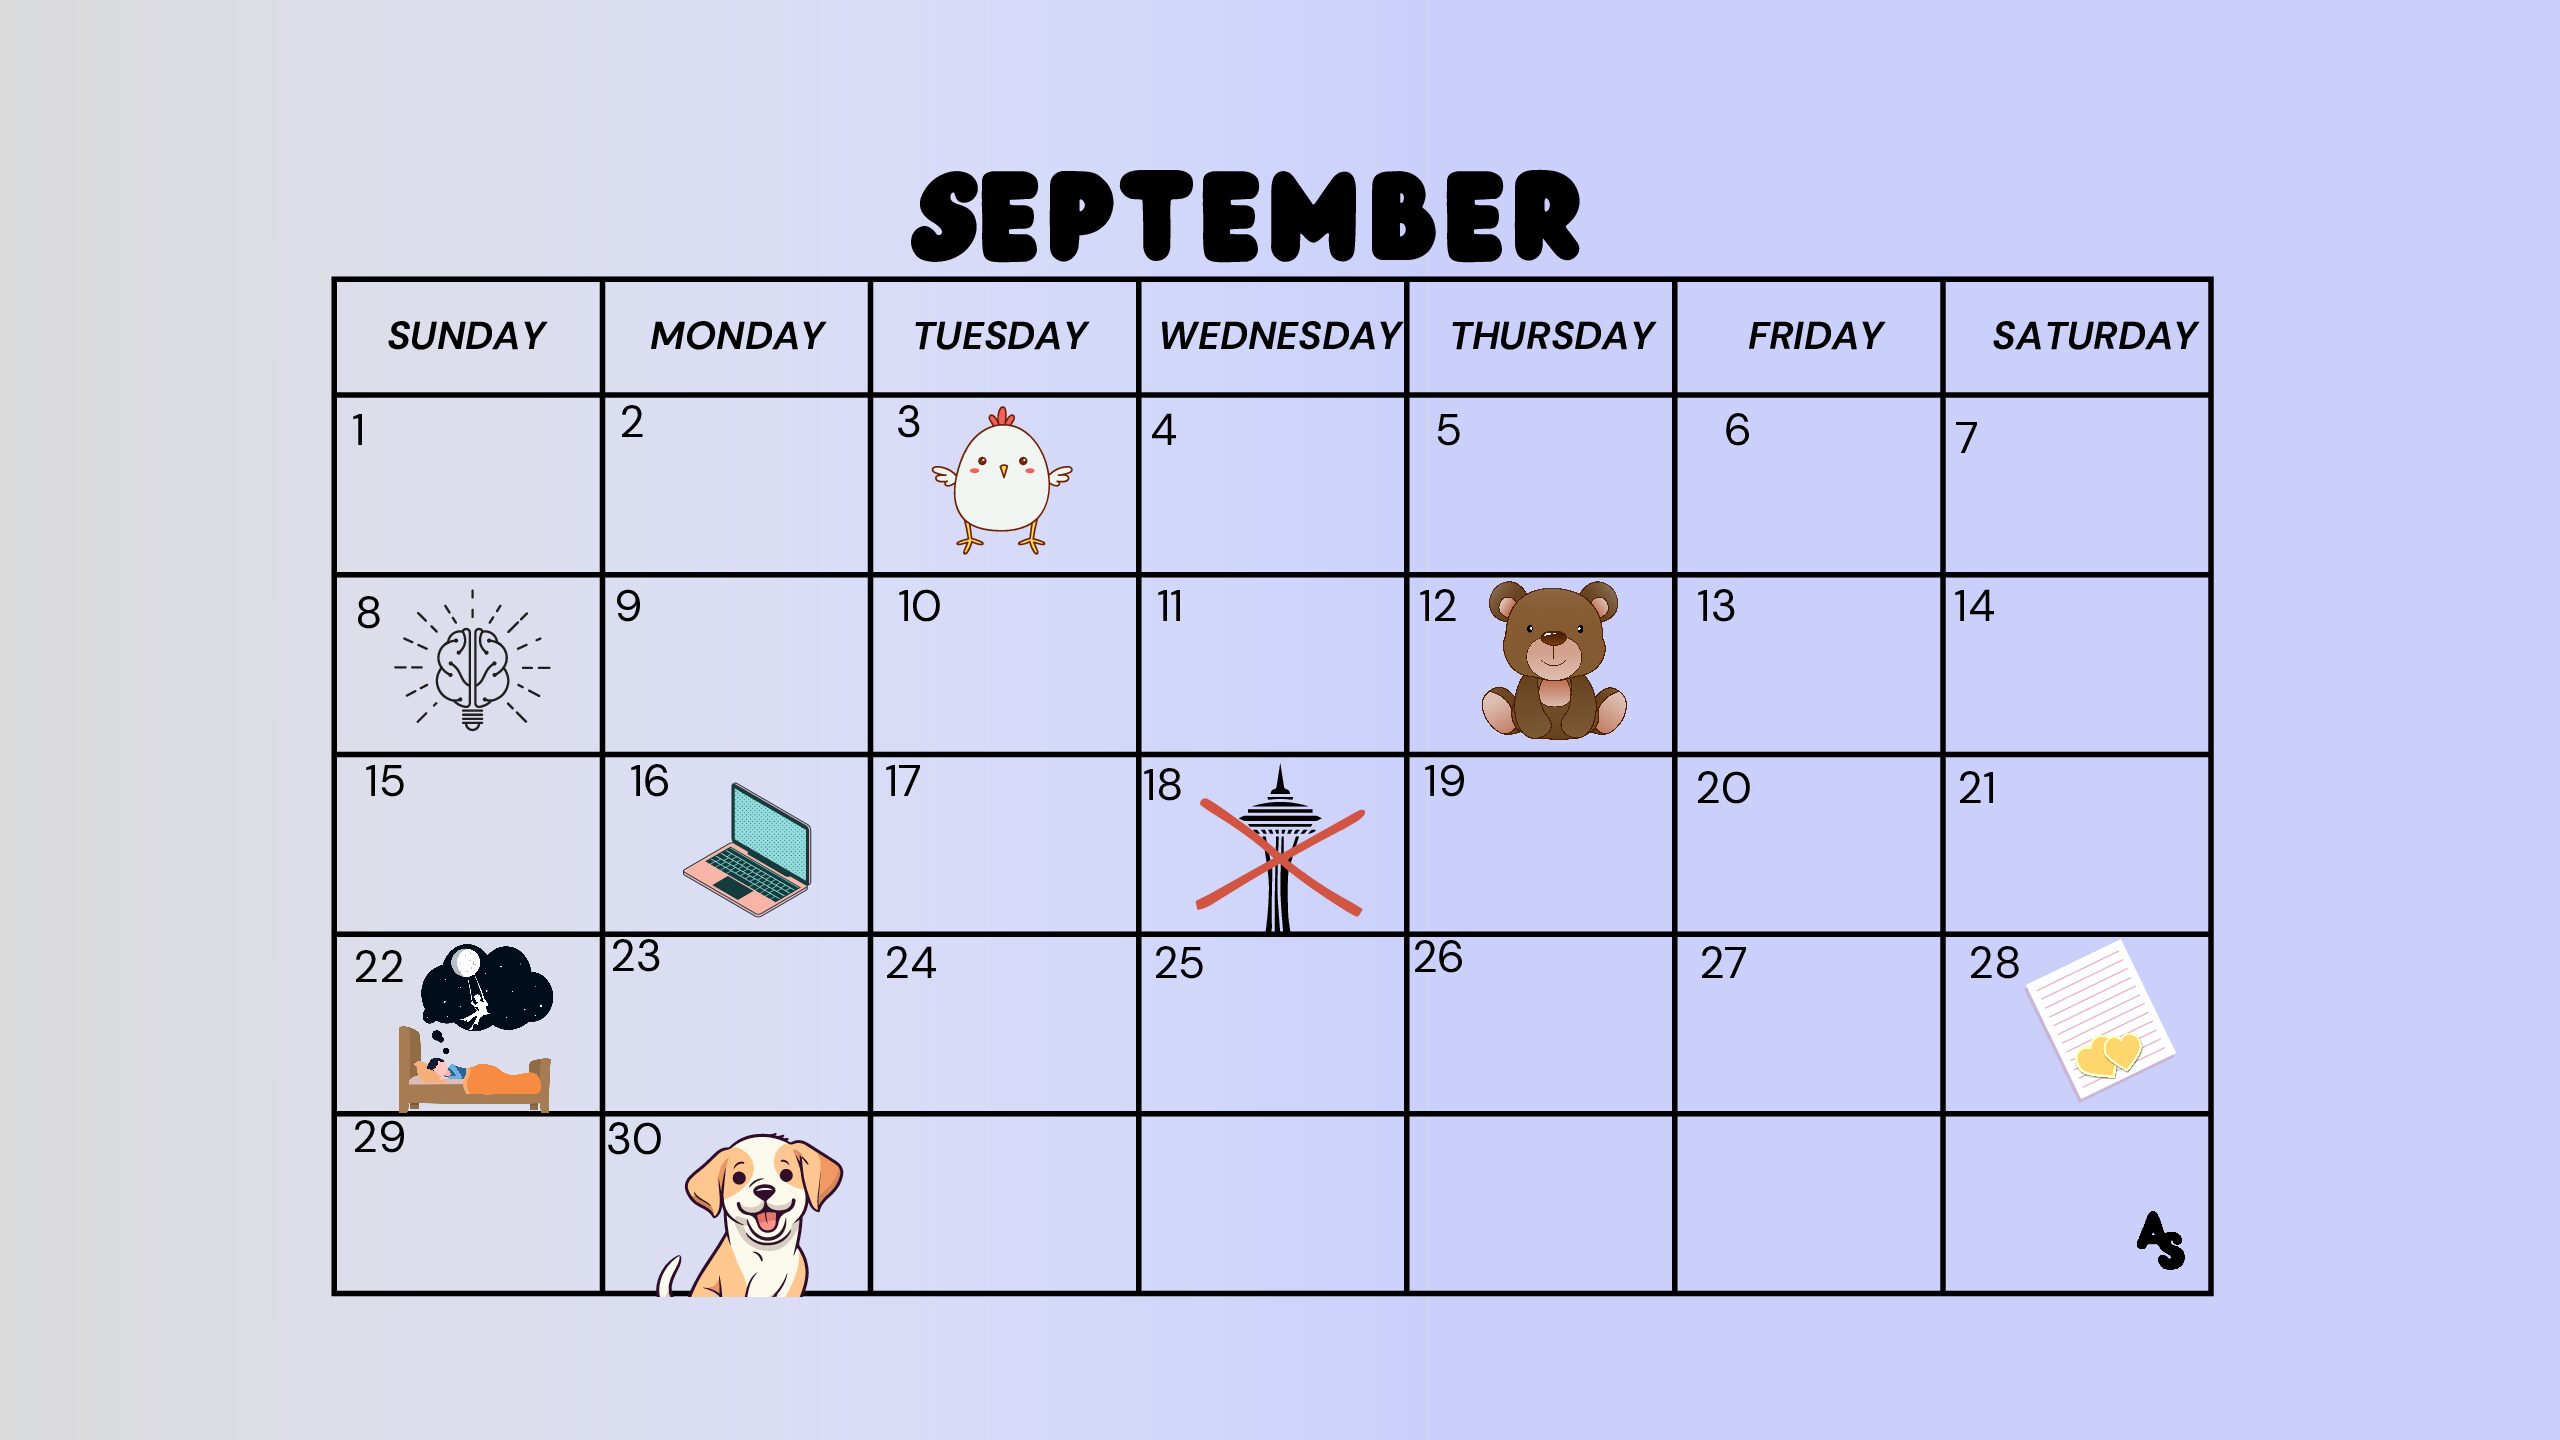 September holiday calendar. Photo credits to Ava Stiglicz